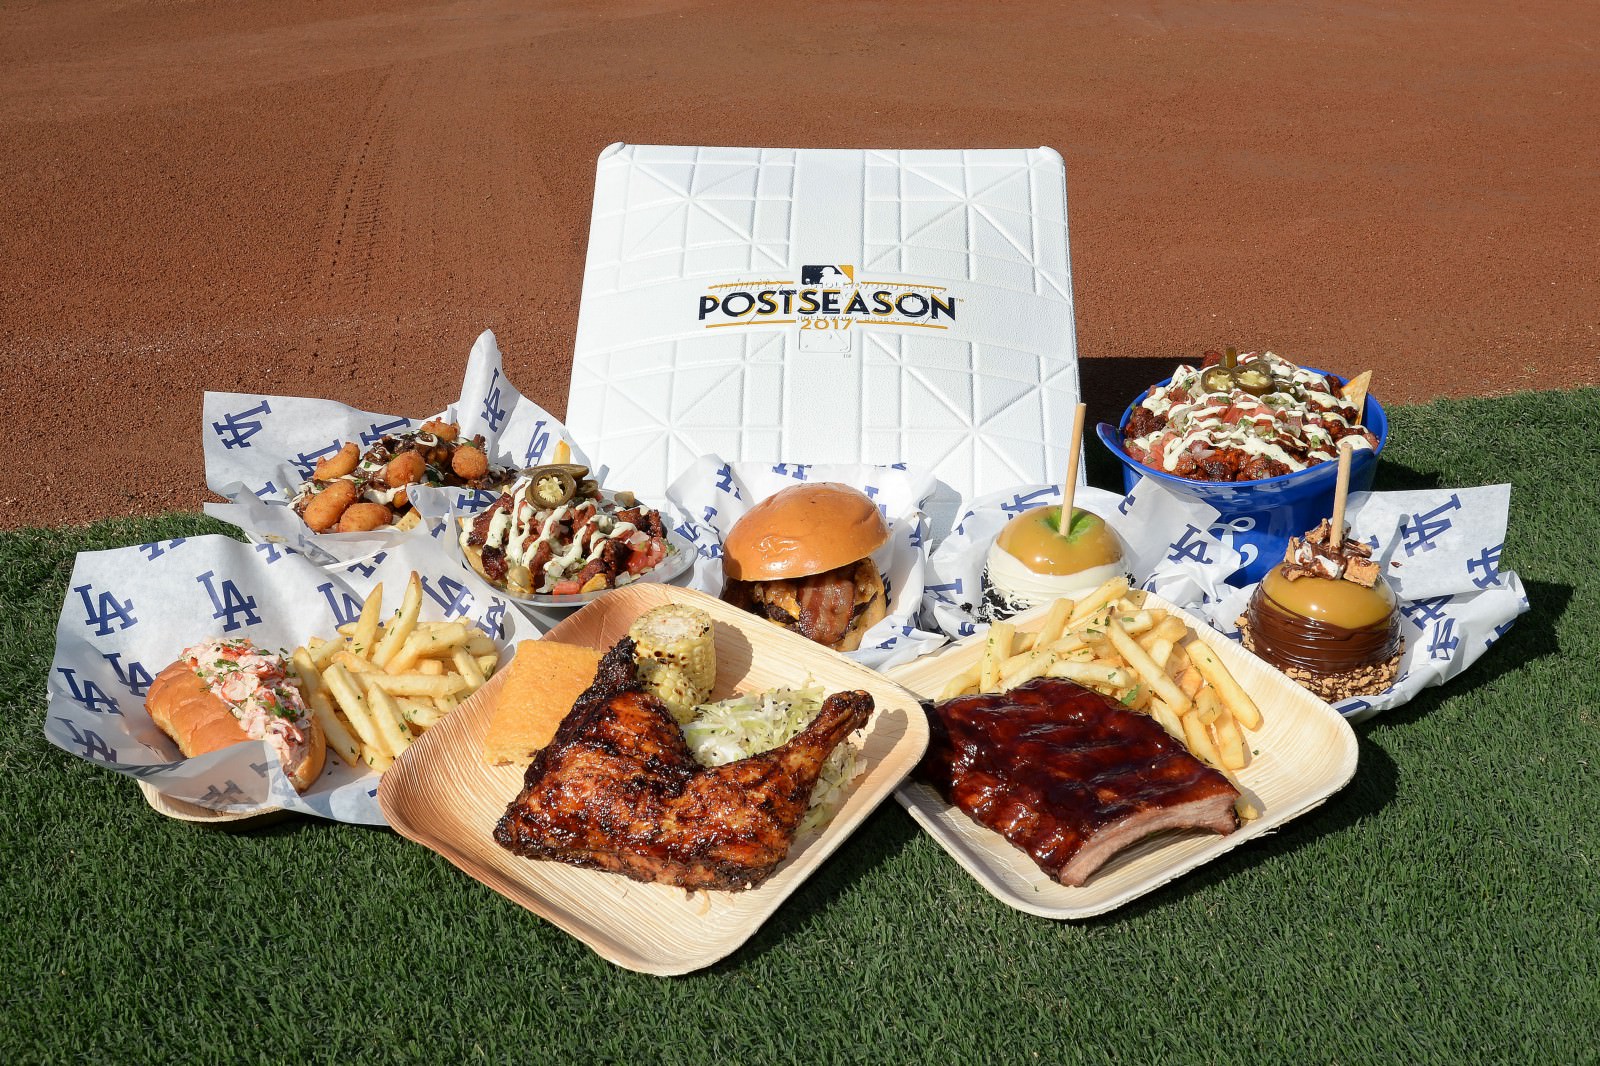 World Series food menu at Dodger Stadium.